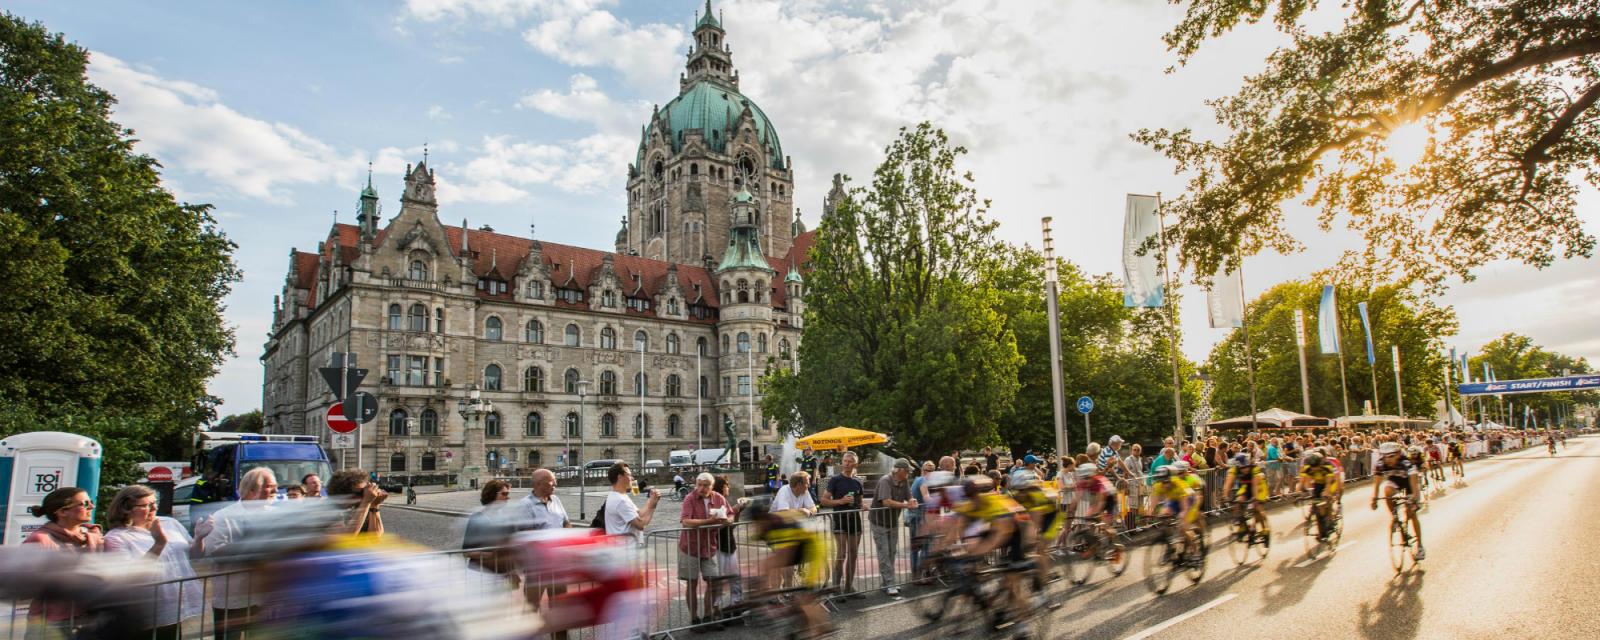 ProAm Hannover: wielrenevent nu voor profs én amateurs 